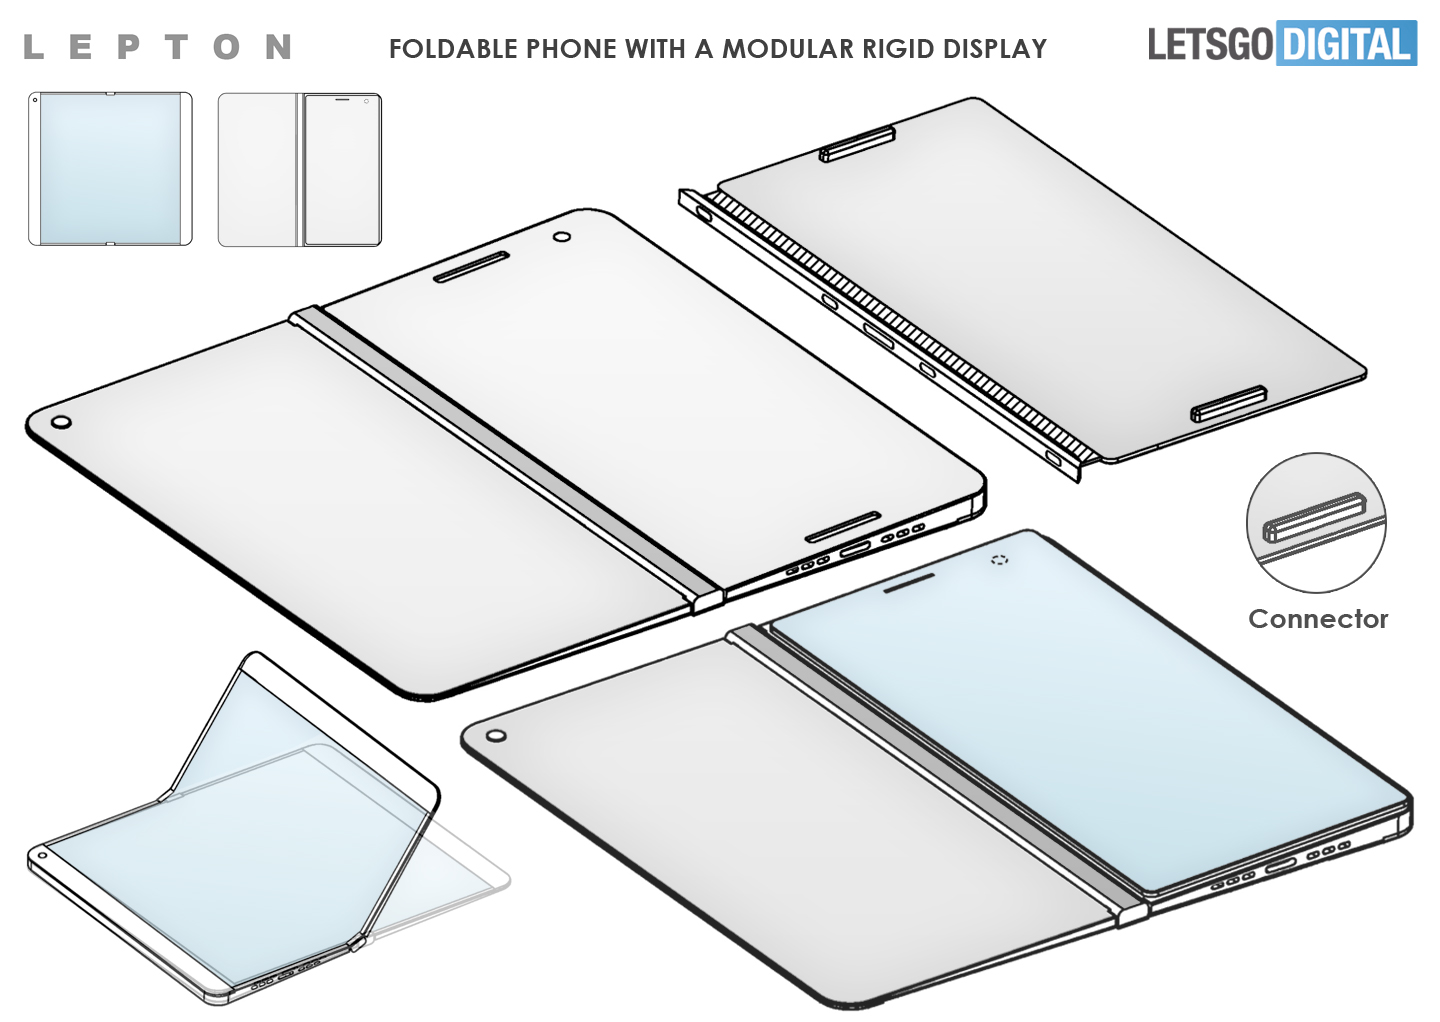 Lepton Flex foldable smartphone